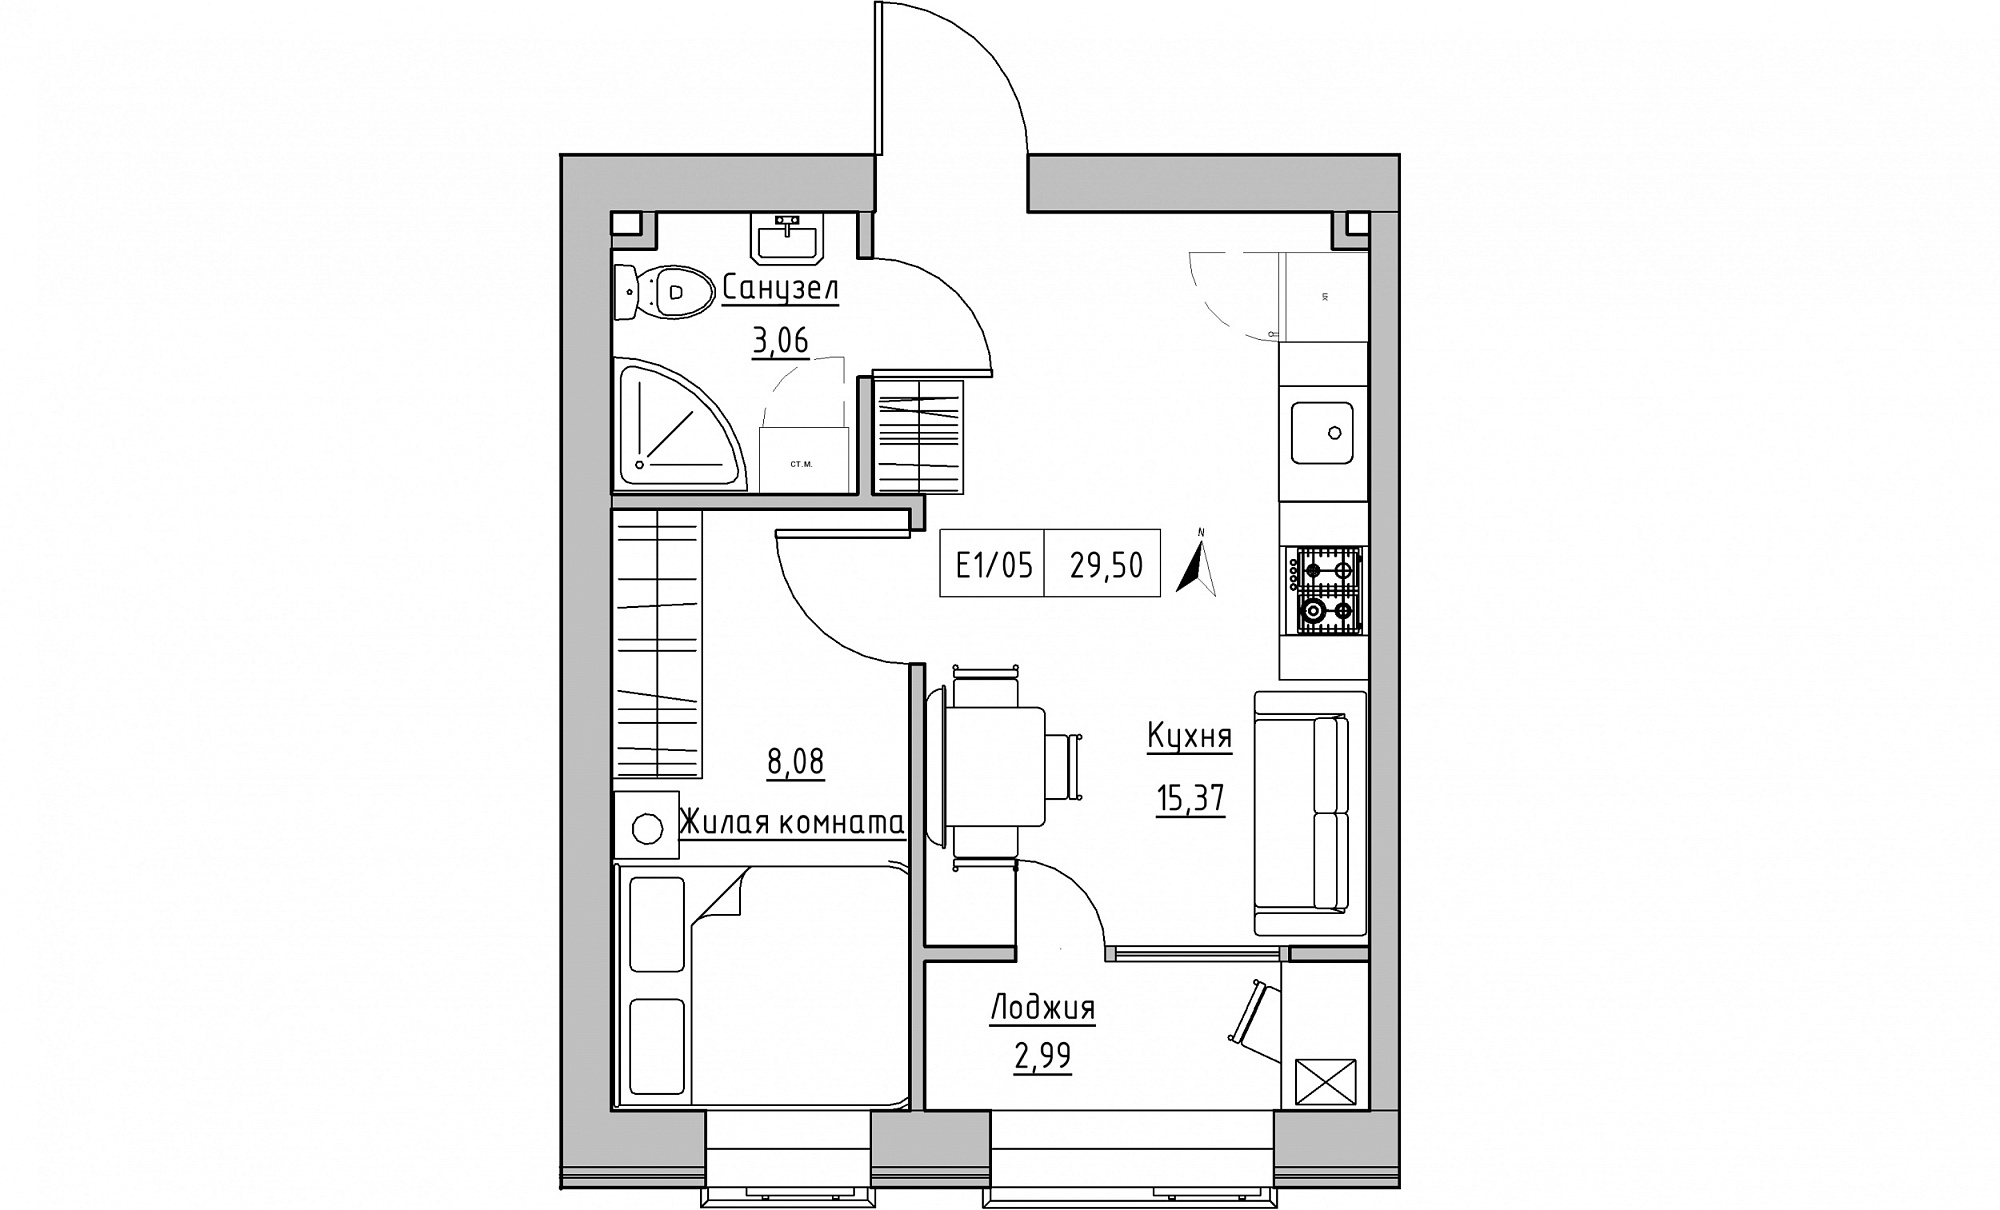 Planning 1-rm flats area 29.5m2, KS-015-01/0010.